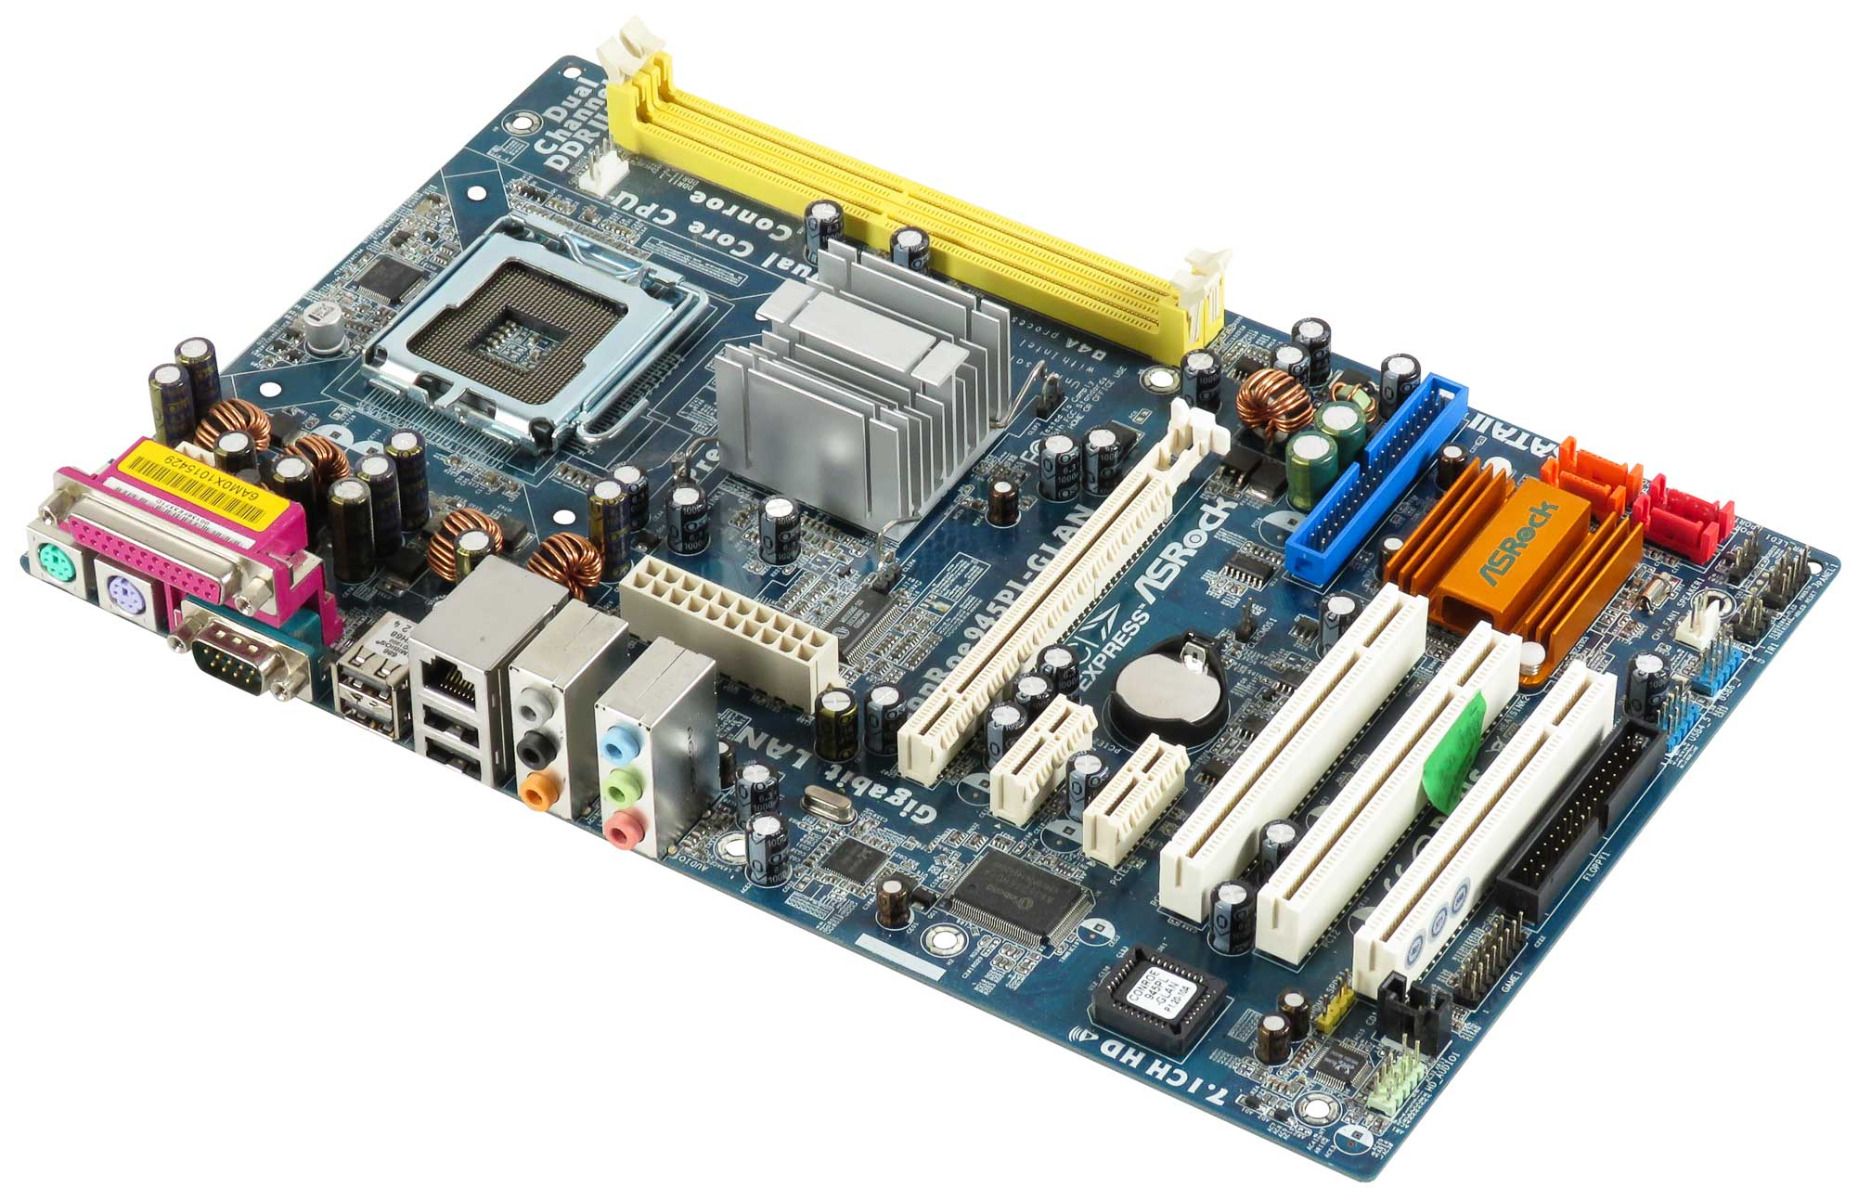 ASROCK ConRoe945PL-GLAN s.775 DDR2 PCI-E PCI